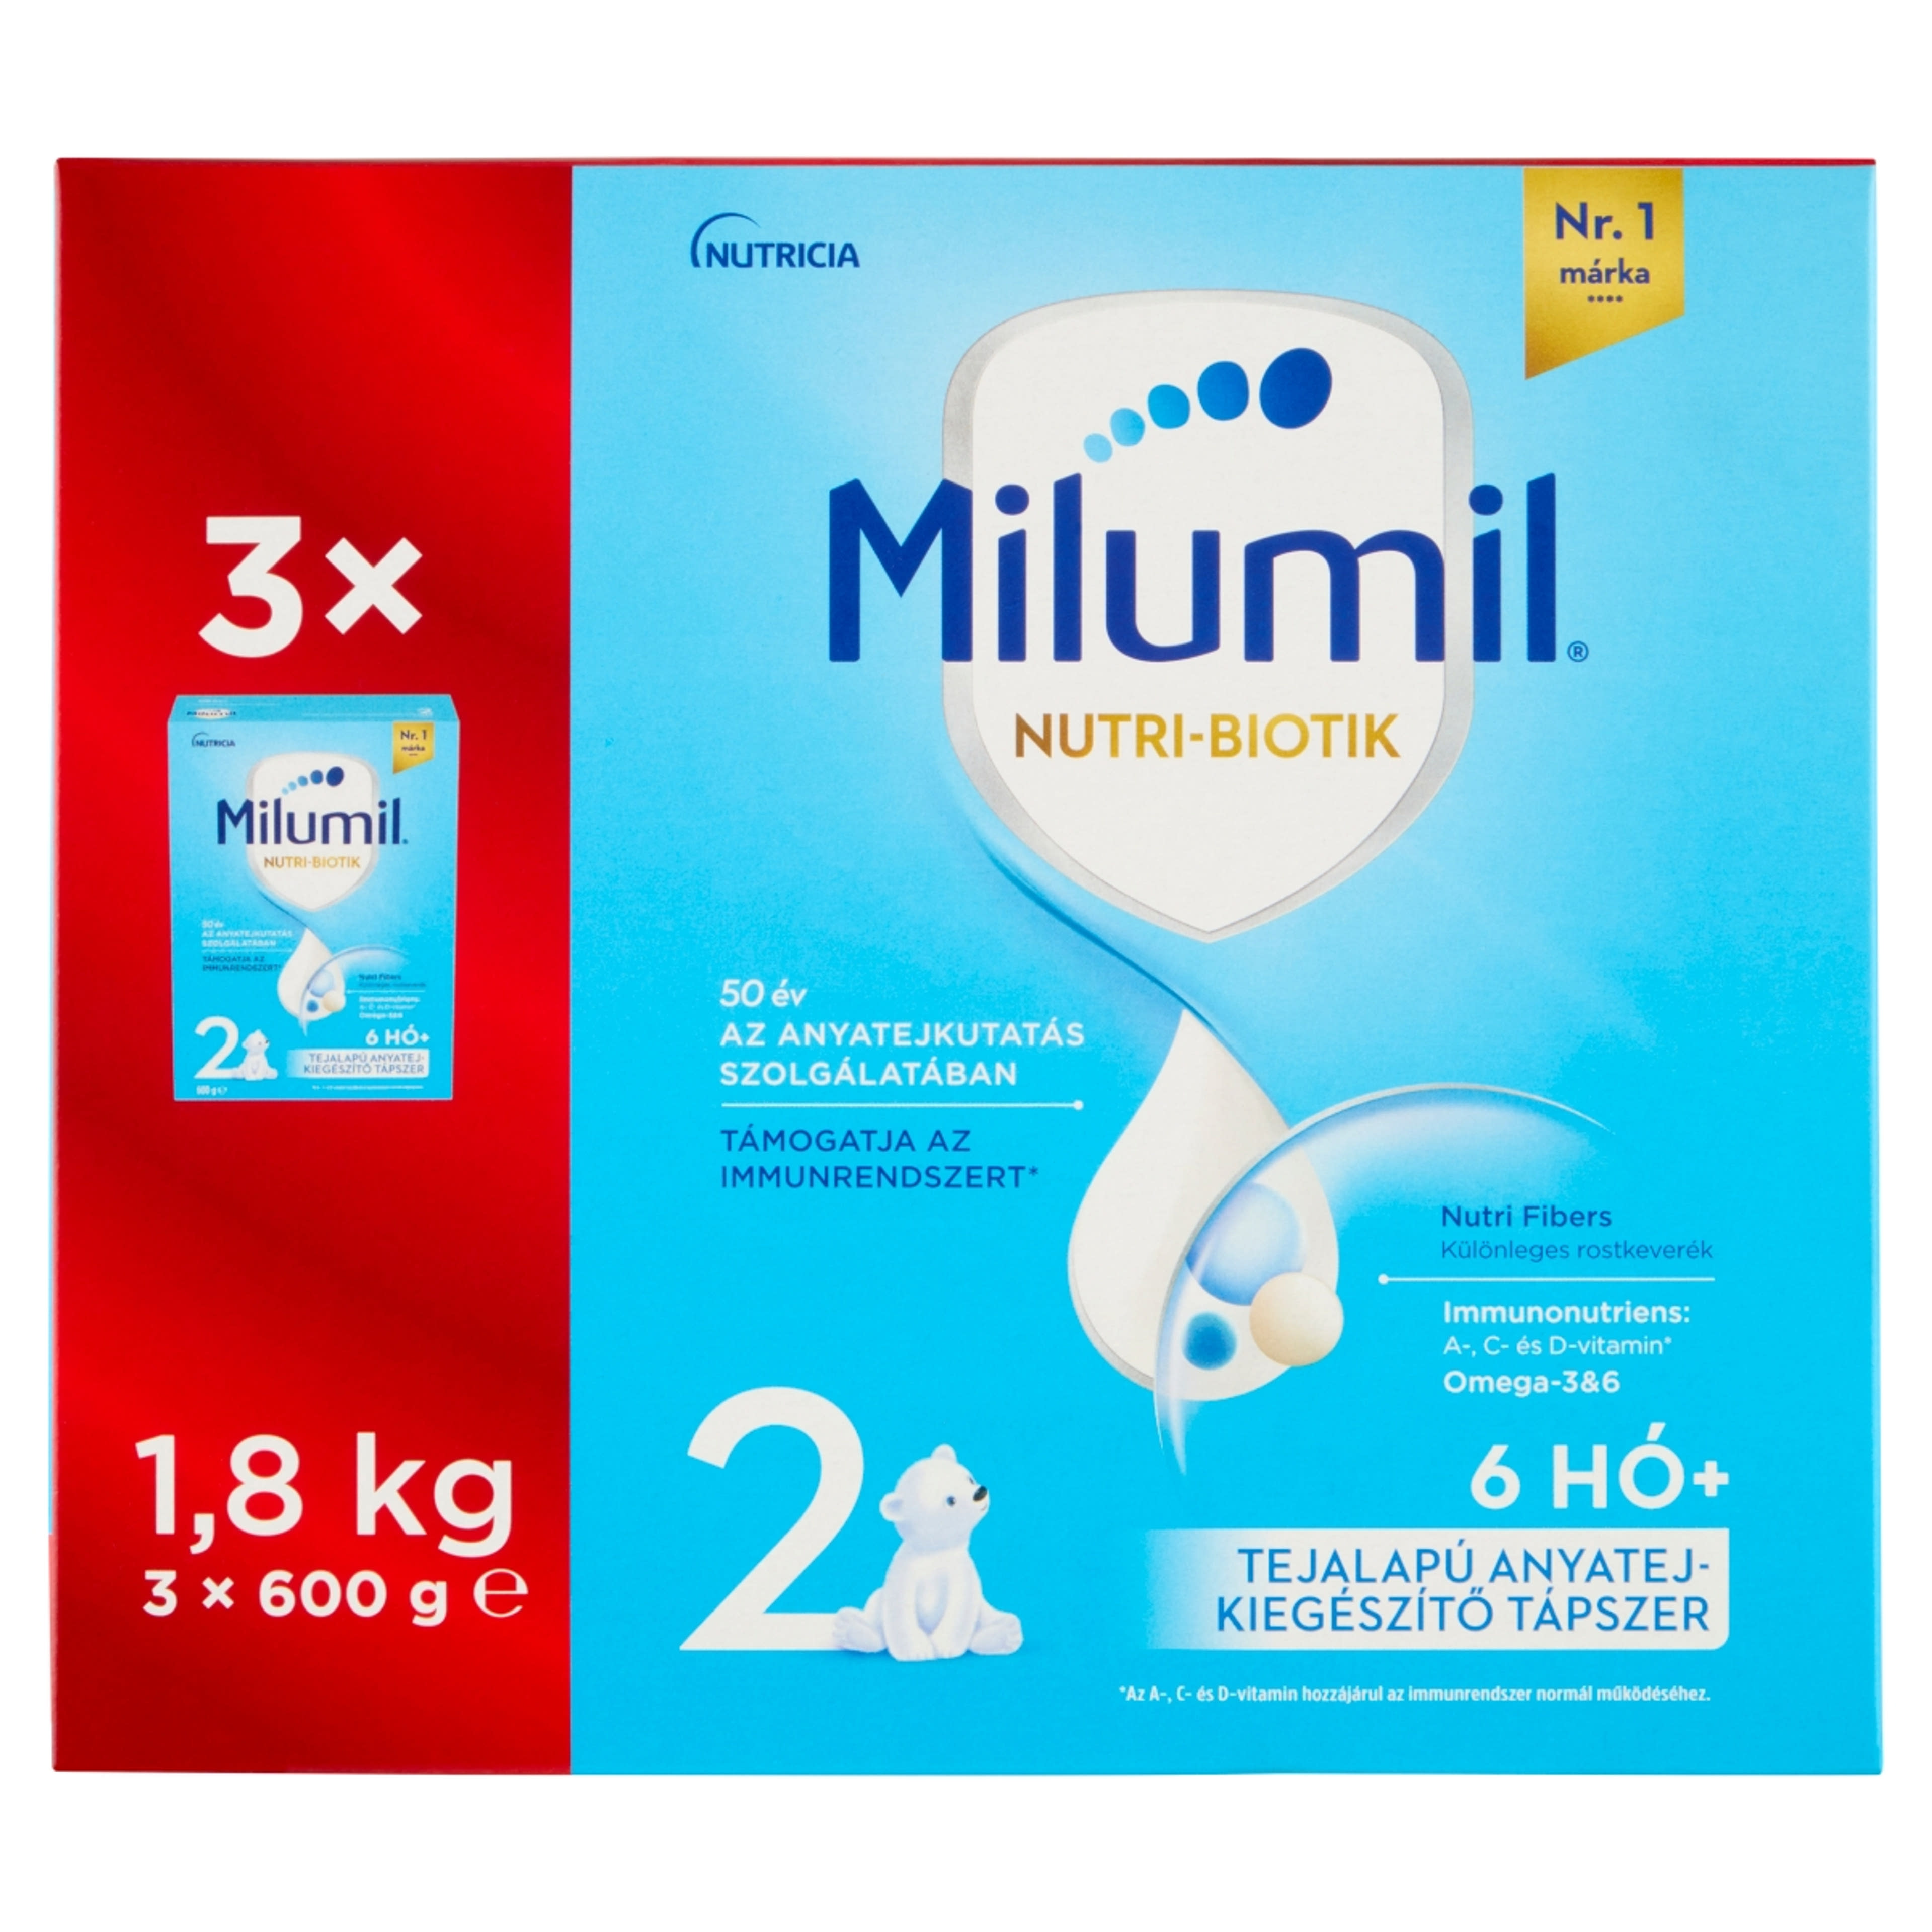 Milumil Nutri-Biotik 2 tejalapú anyatej-kiegészítő tápszer 6 hónapos kortól - 1800 g